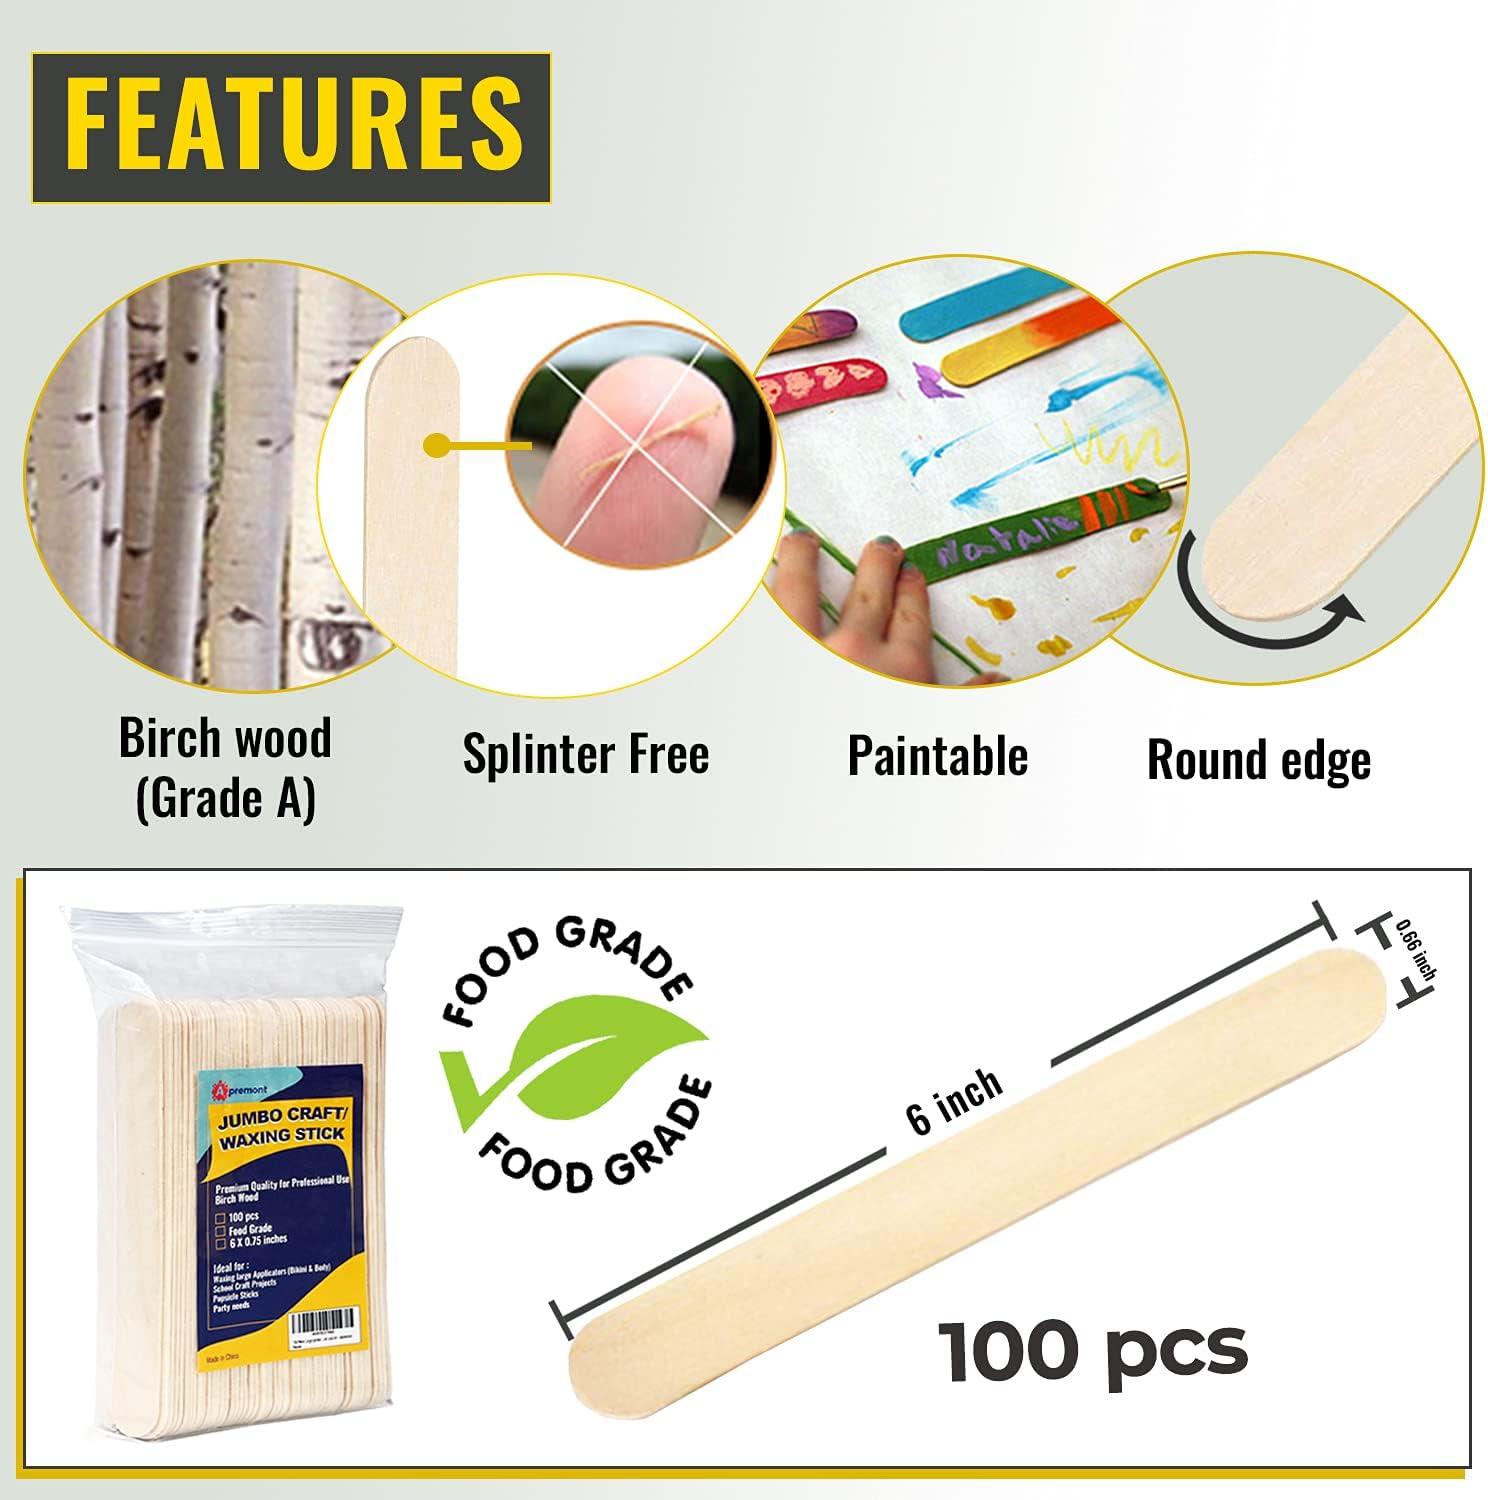 Natural Wood Craft Sticks 100pc, Popsicle Sticks for Crafts/Resin